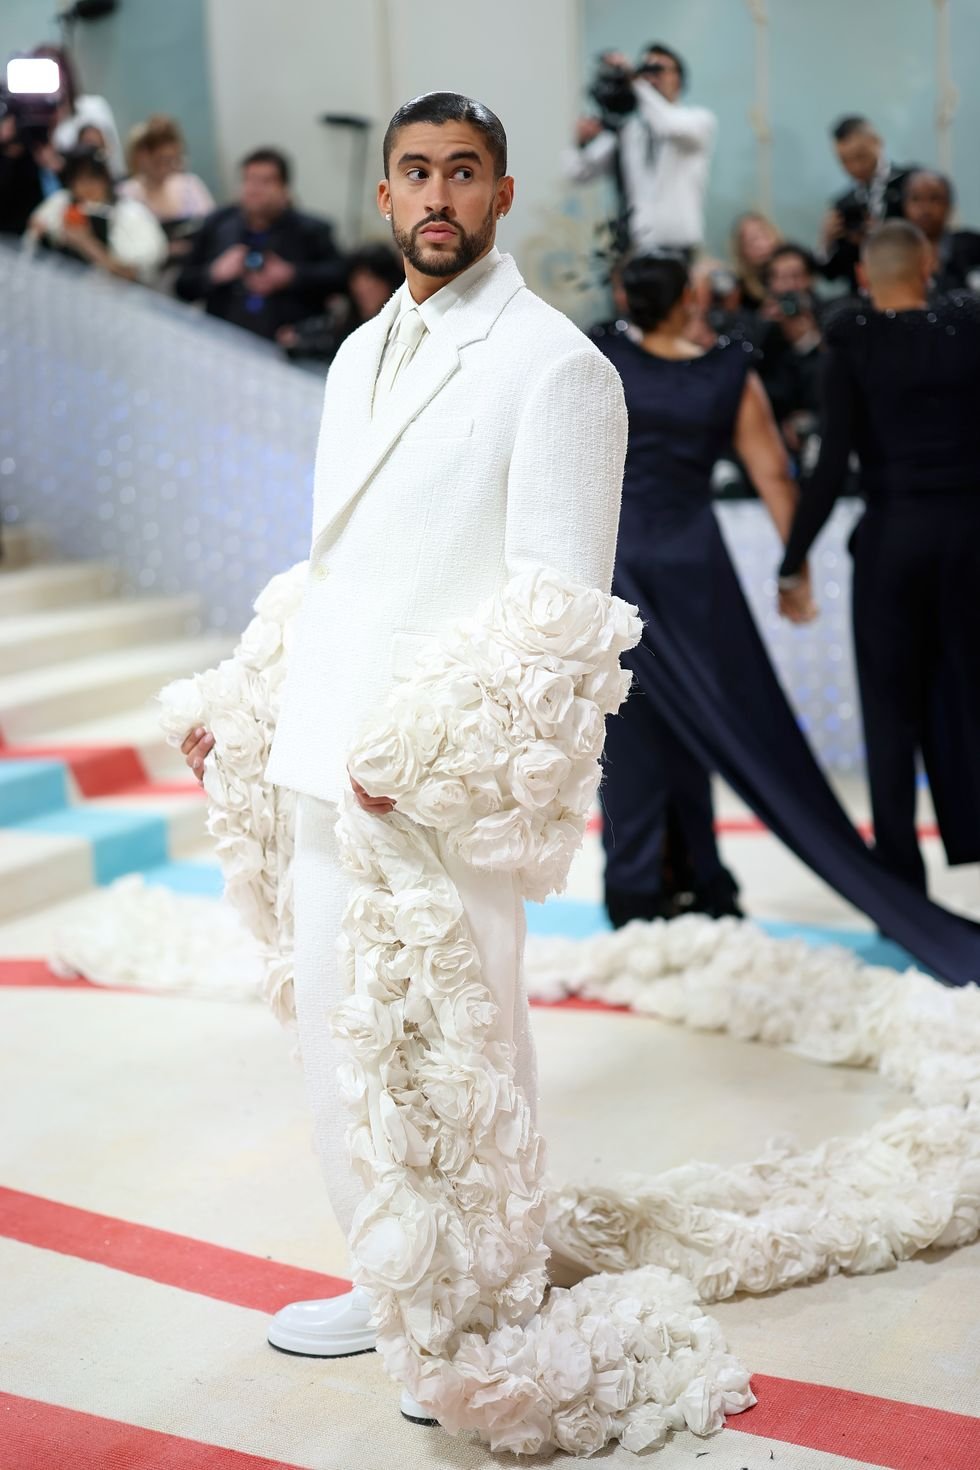 Selena Gomez rocks a beige turtleneck with a Louis Vuitton trench